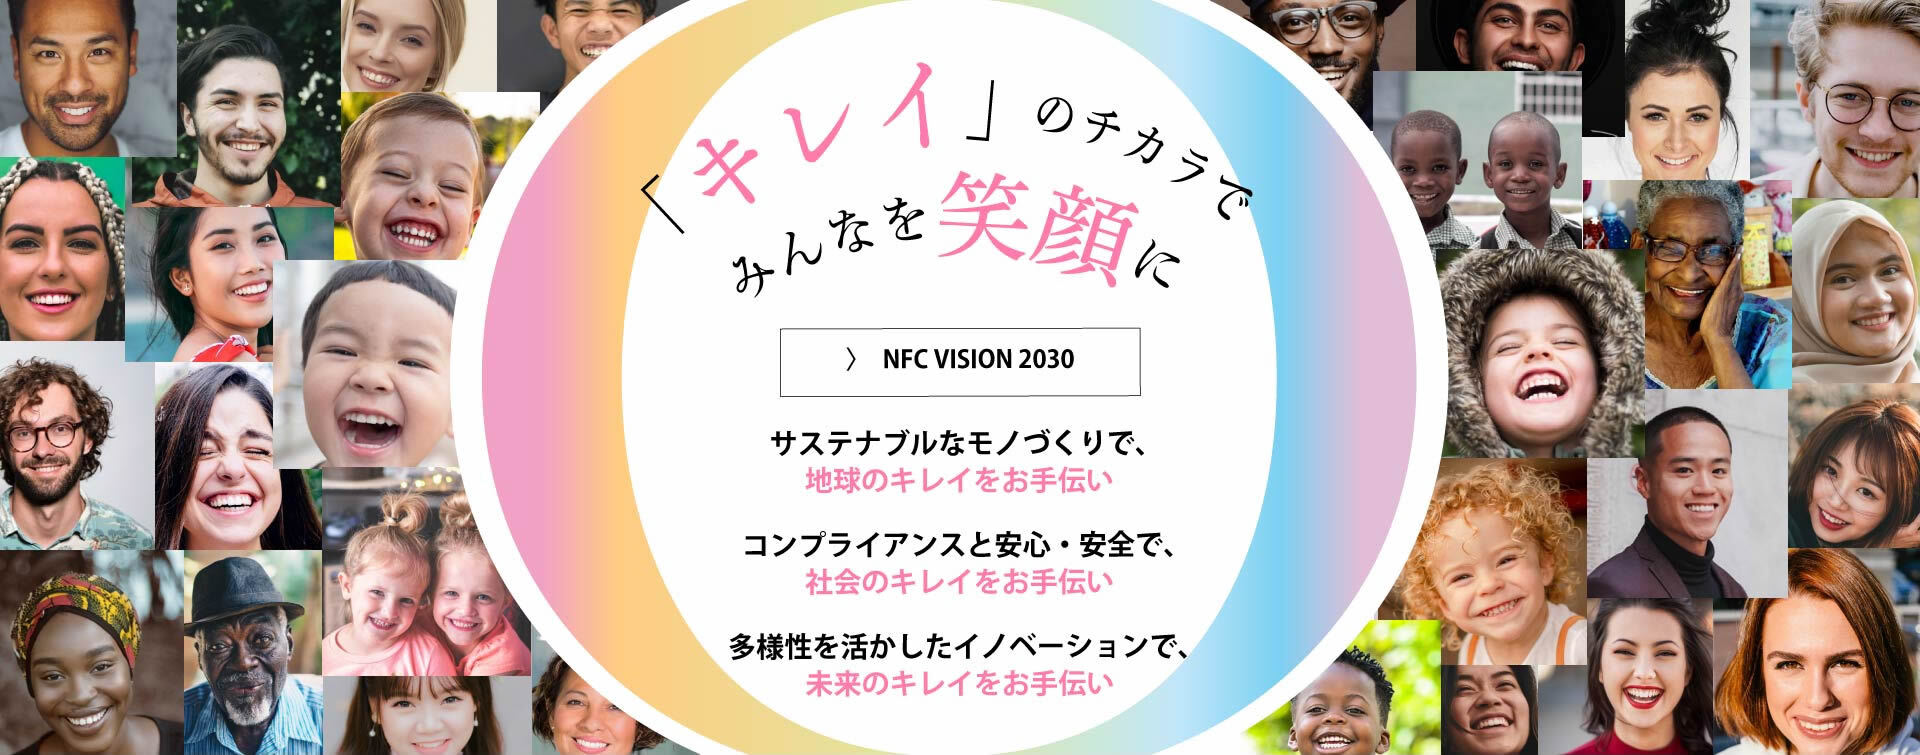 NFC VISION 2030